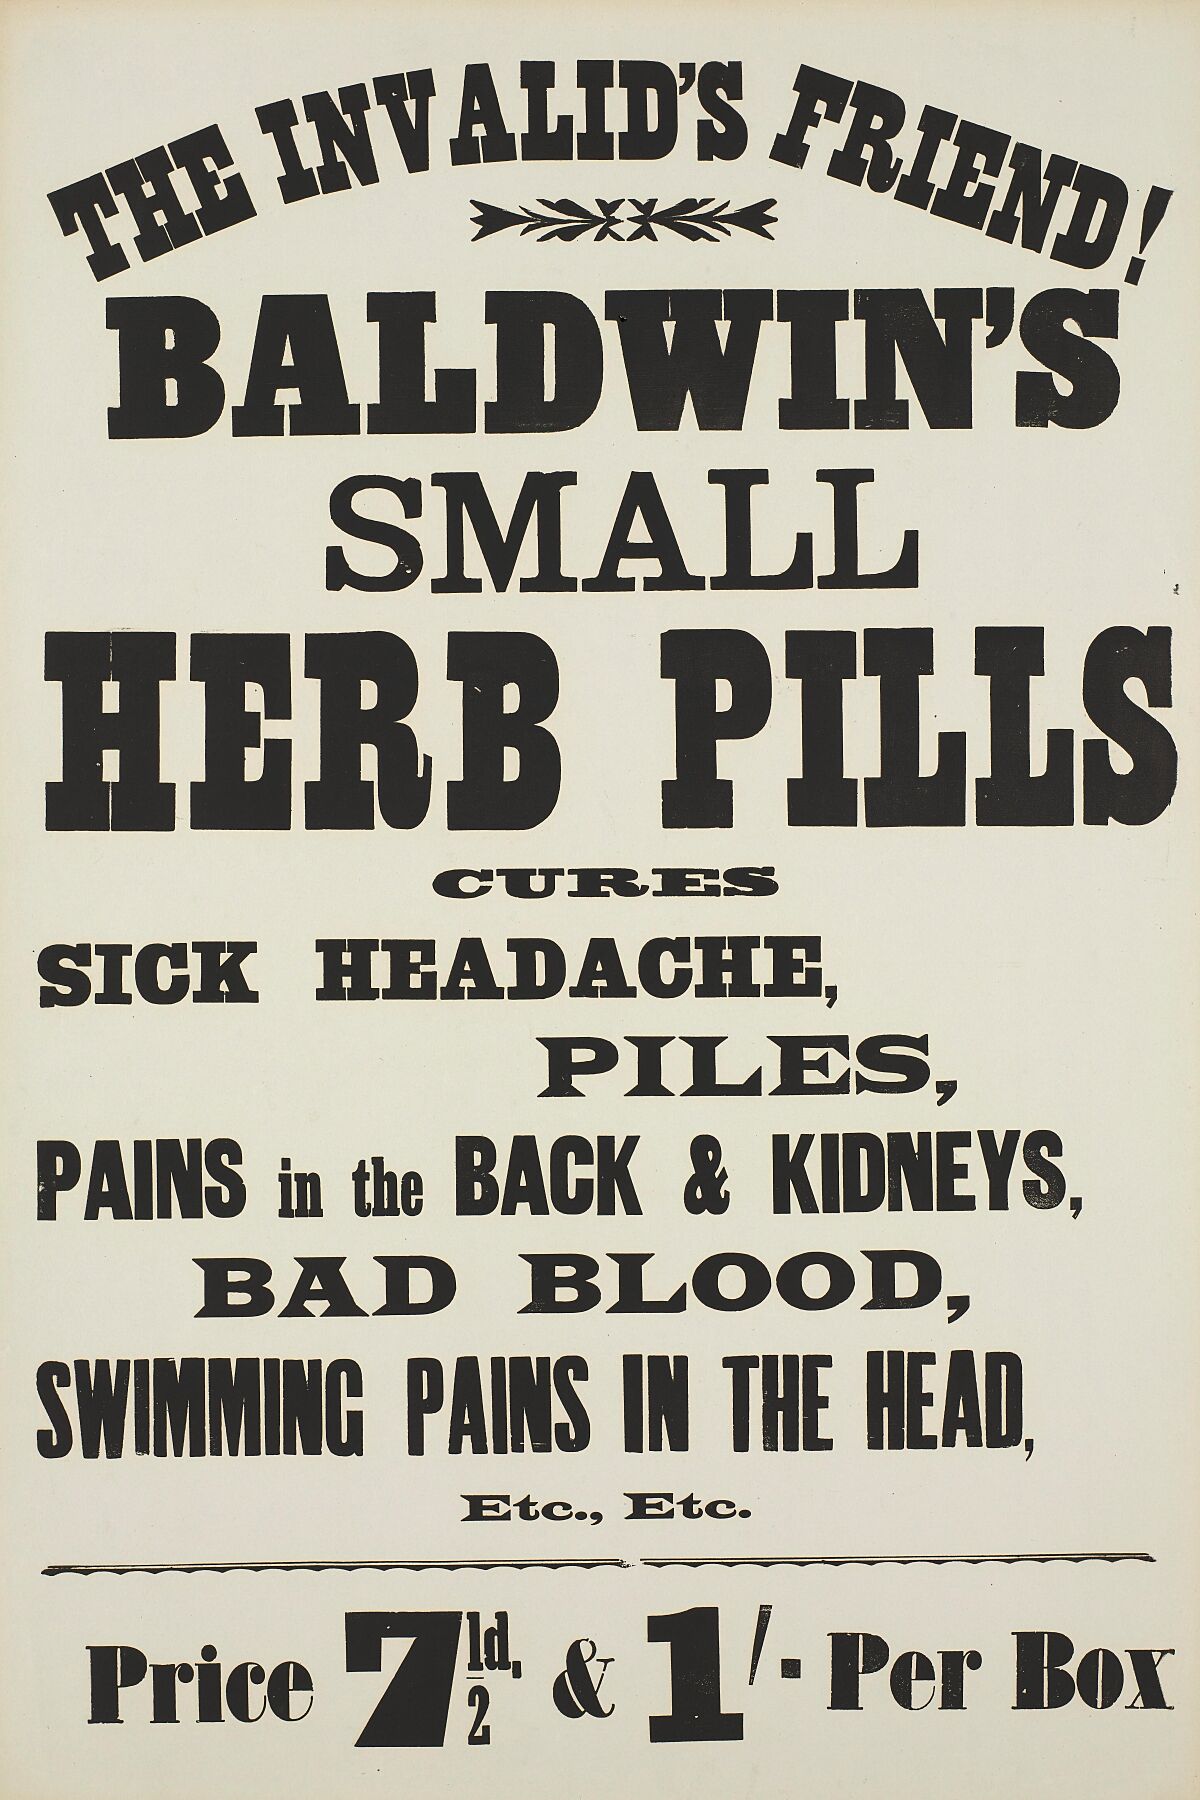 Baldwin's Small Herb Pills - c.1900